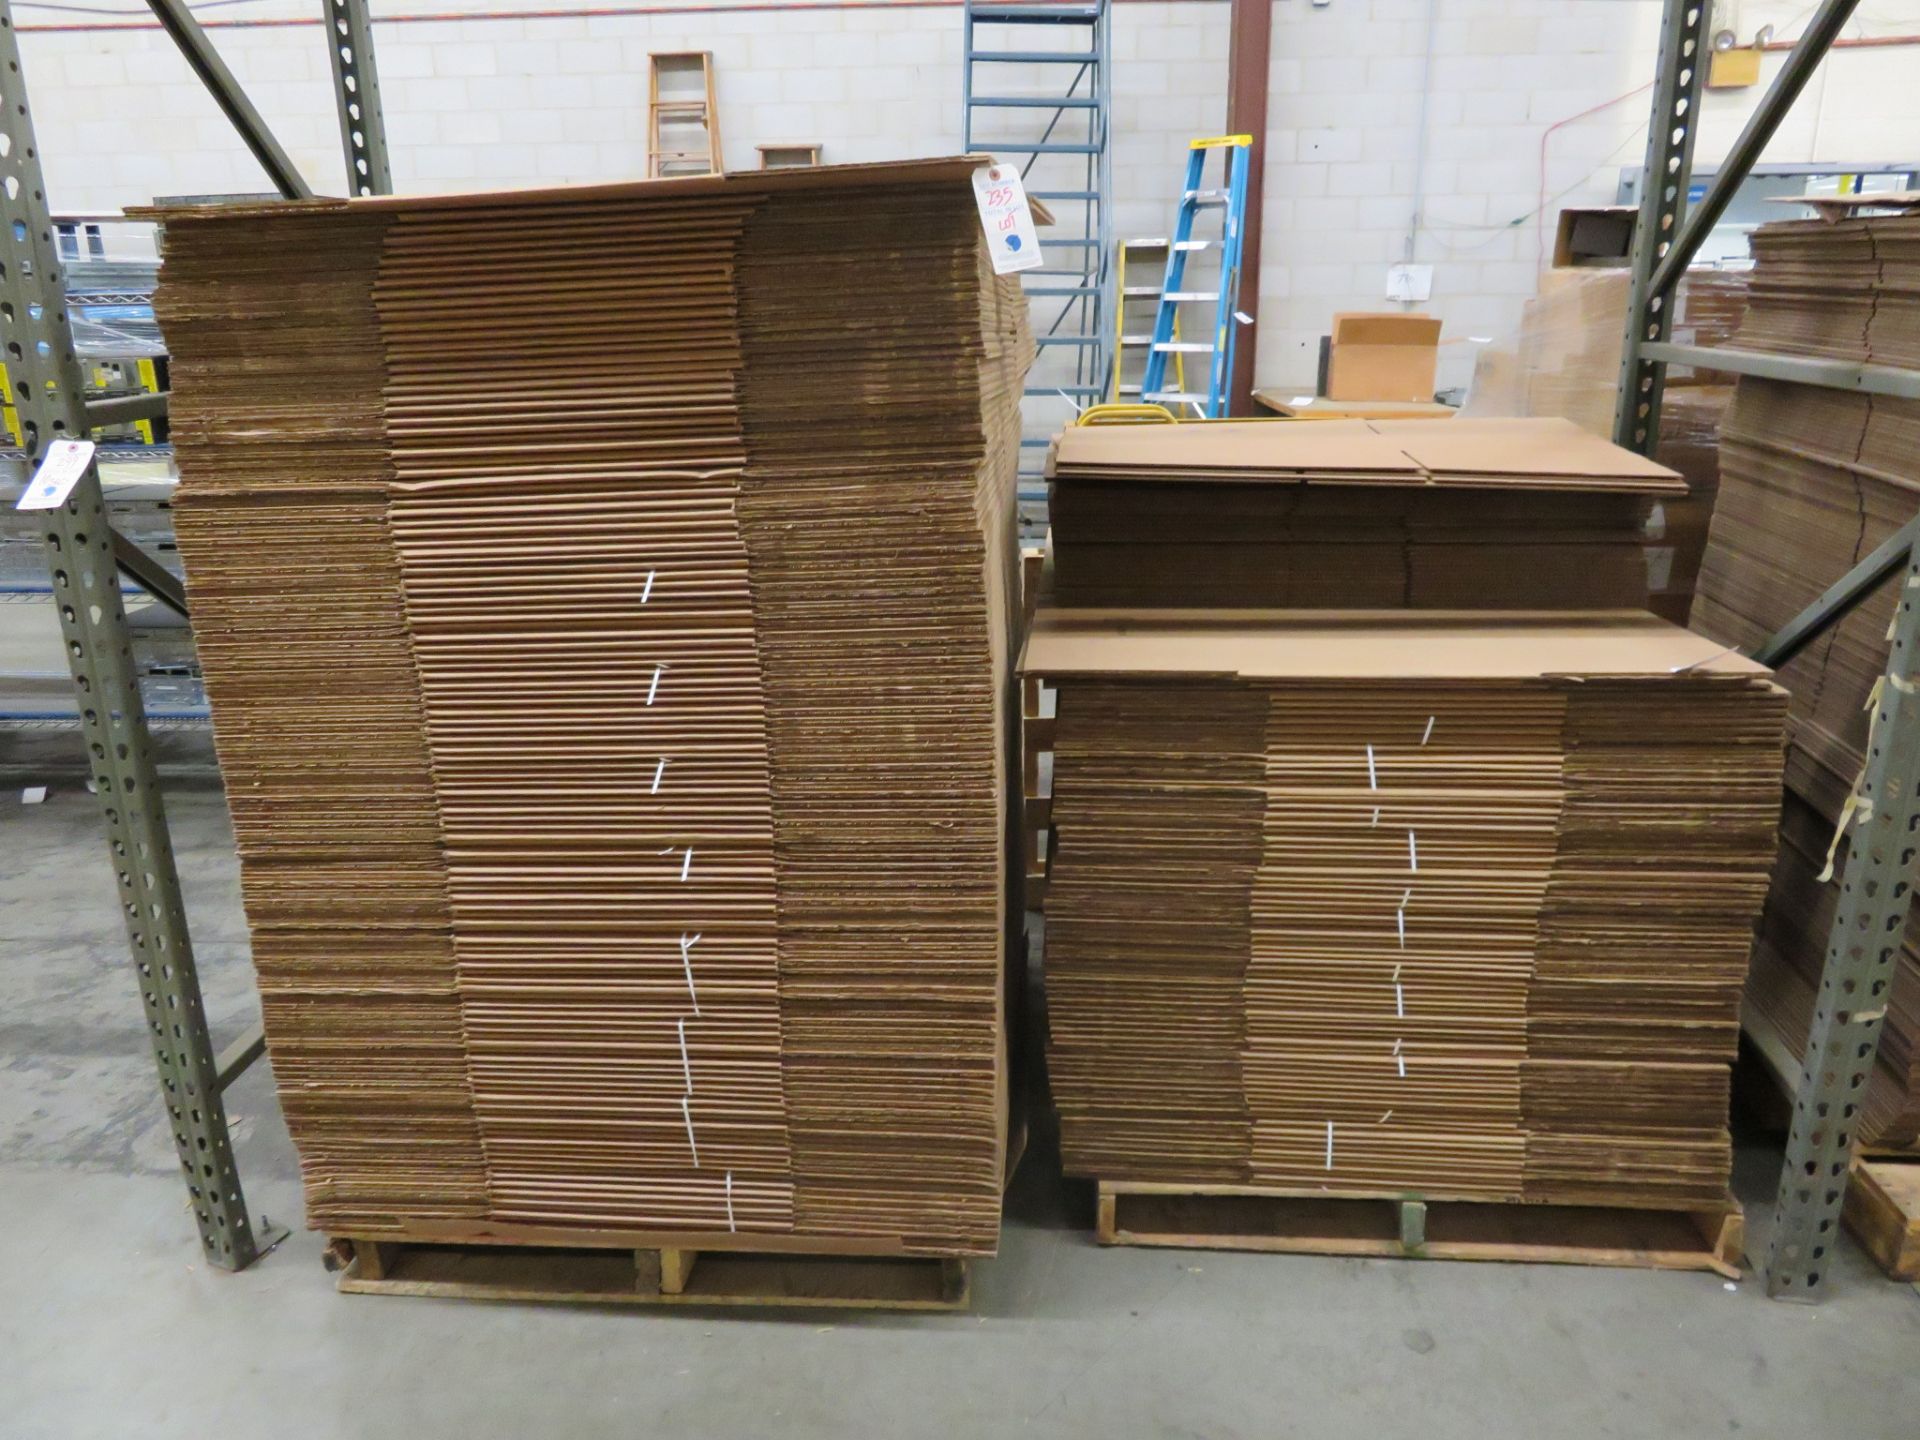 [LOT] Asst. Corrugated Cardboard Boxes in 1 Bay (24x24x18, 24x24x16, 24x16x8)